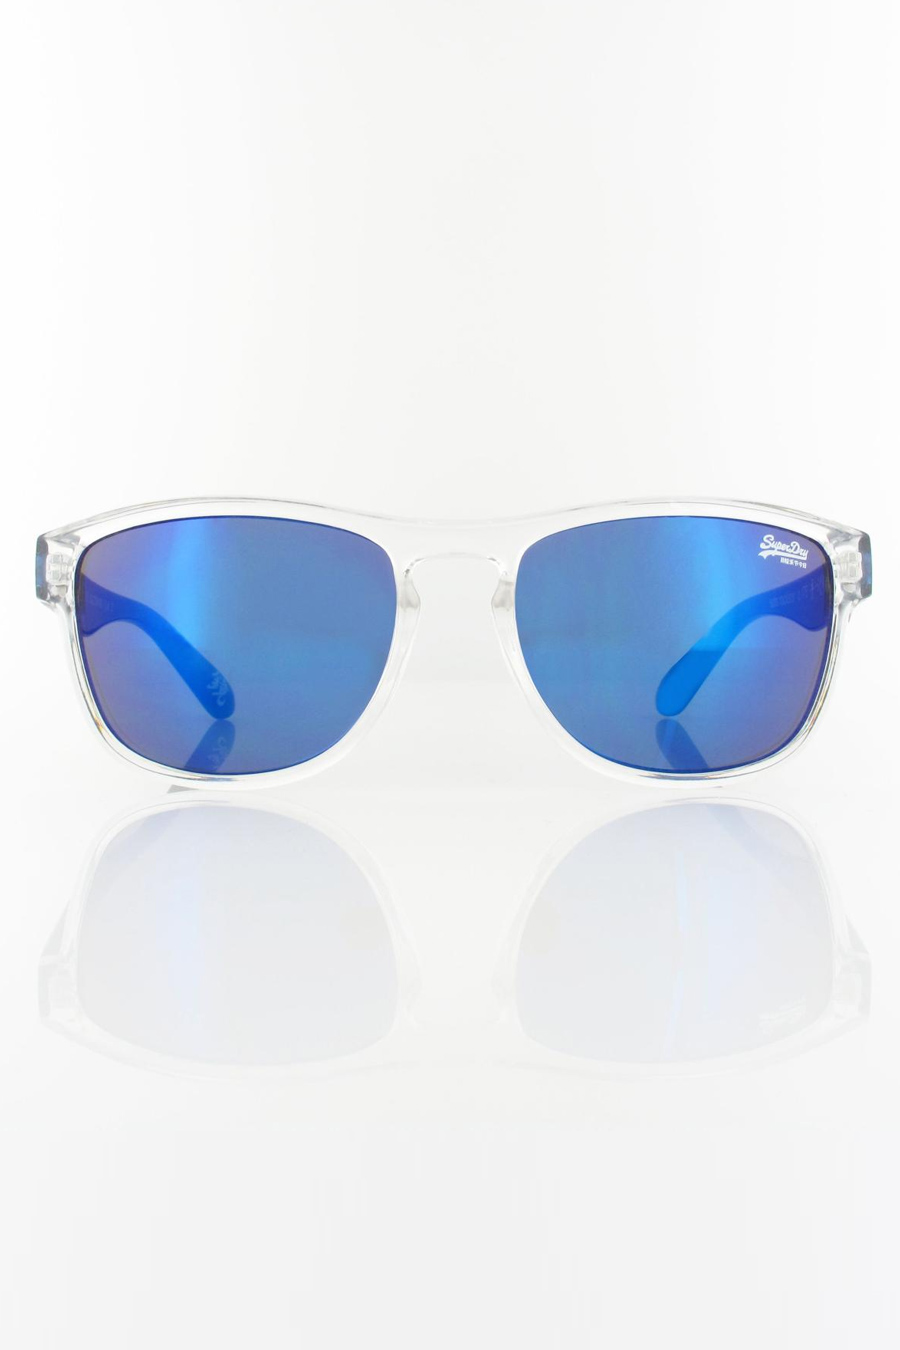 Sunglasses SUPERDRY SDS-ROCKSTAR-175